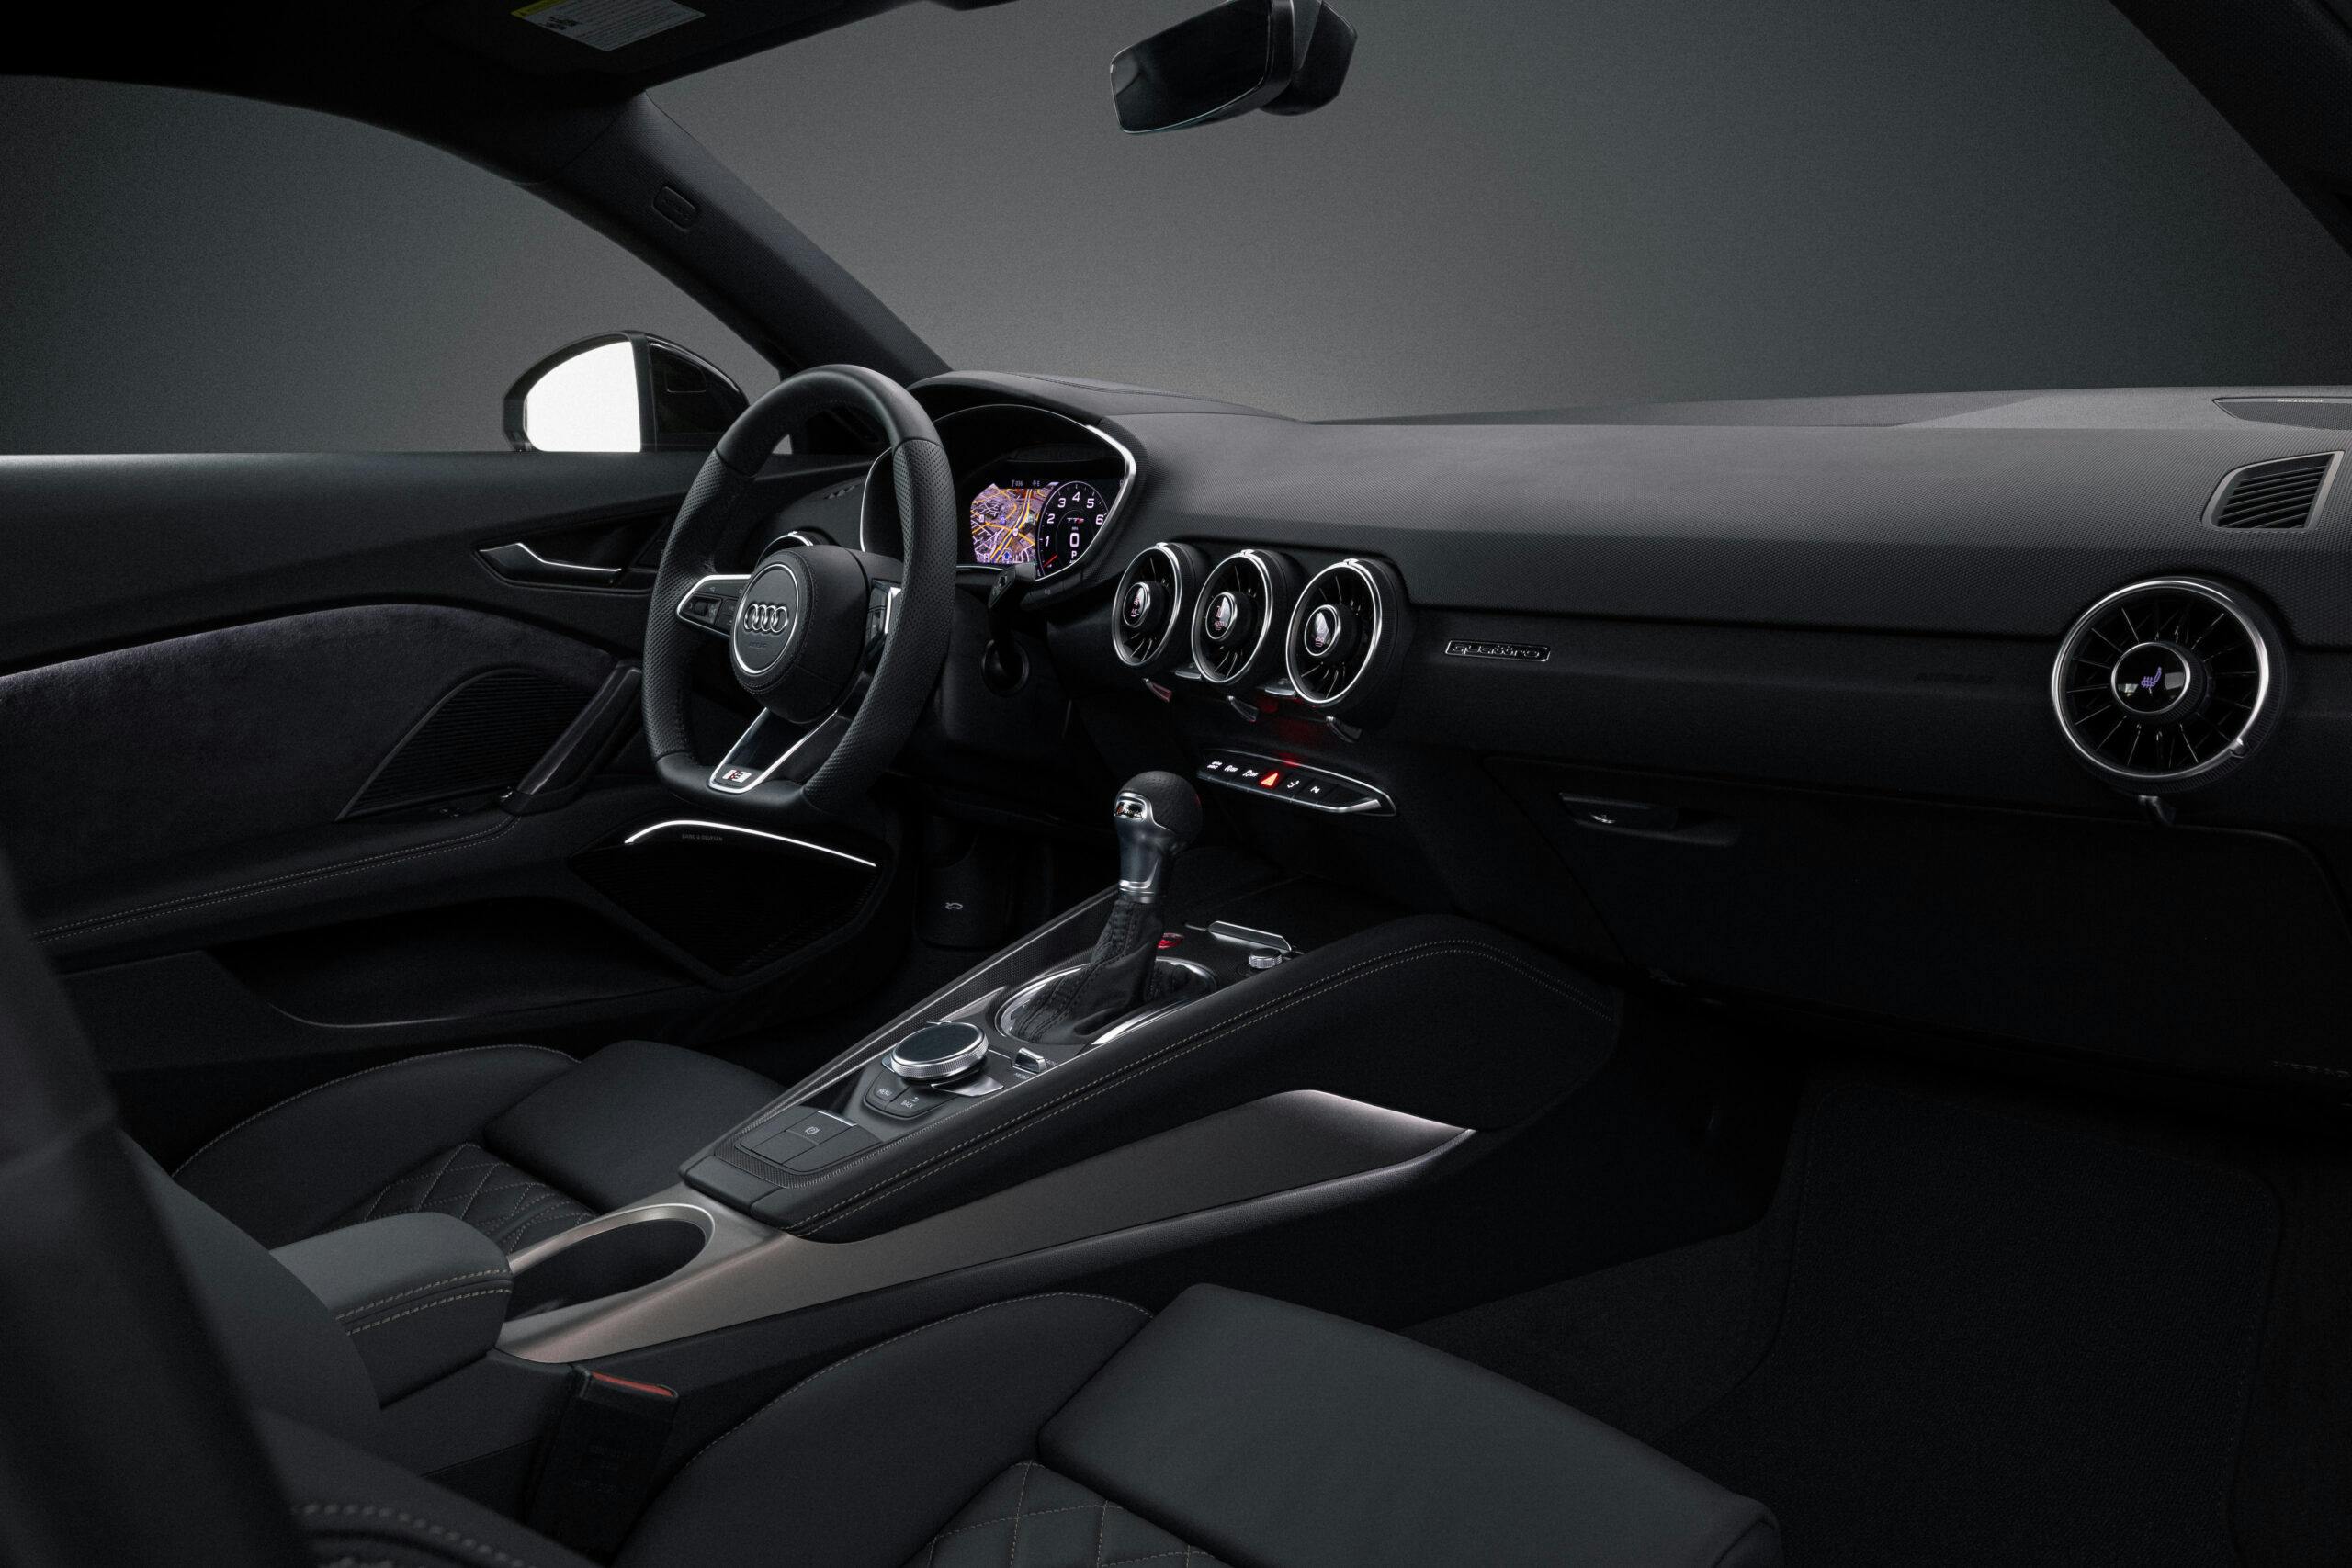 Audi TT interior front dash angled